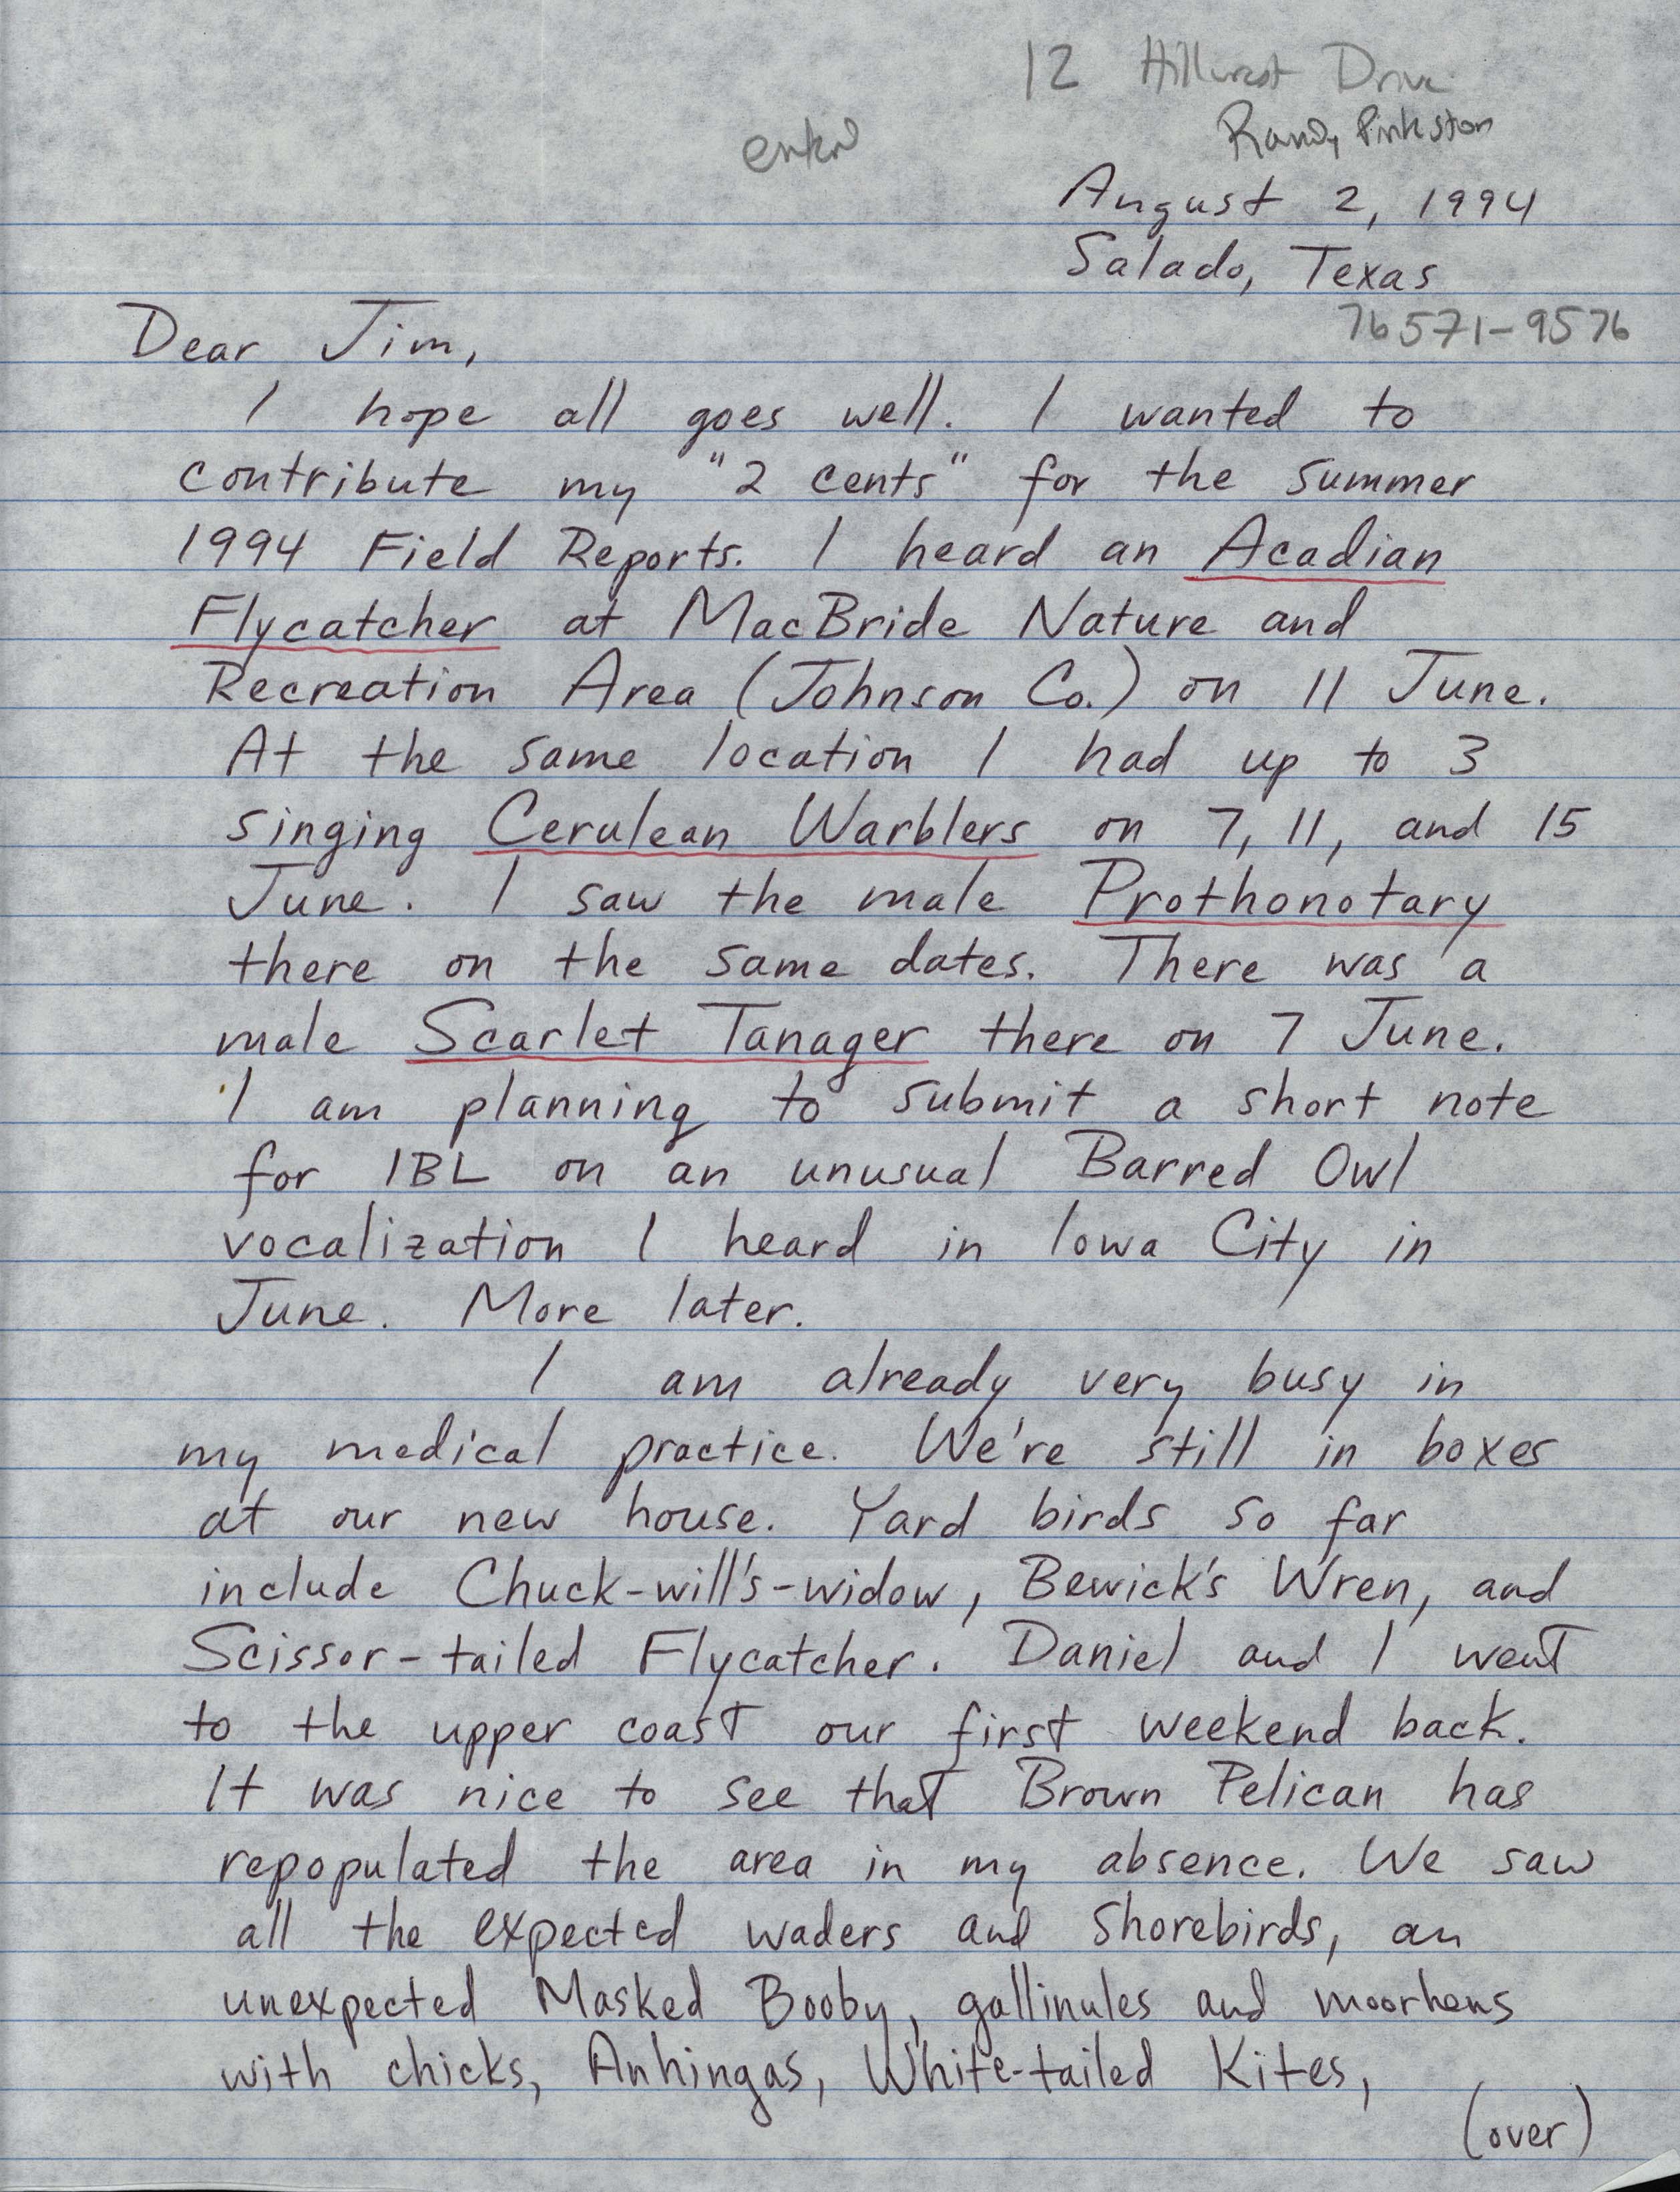 Randy Pinkston letter to Jim Dinsmore regarding summer 1994 field reports, August 2, 1994